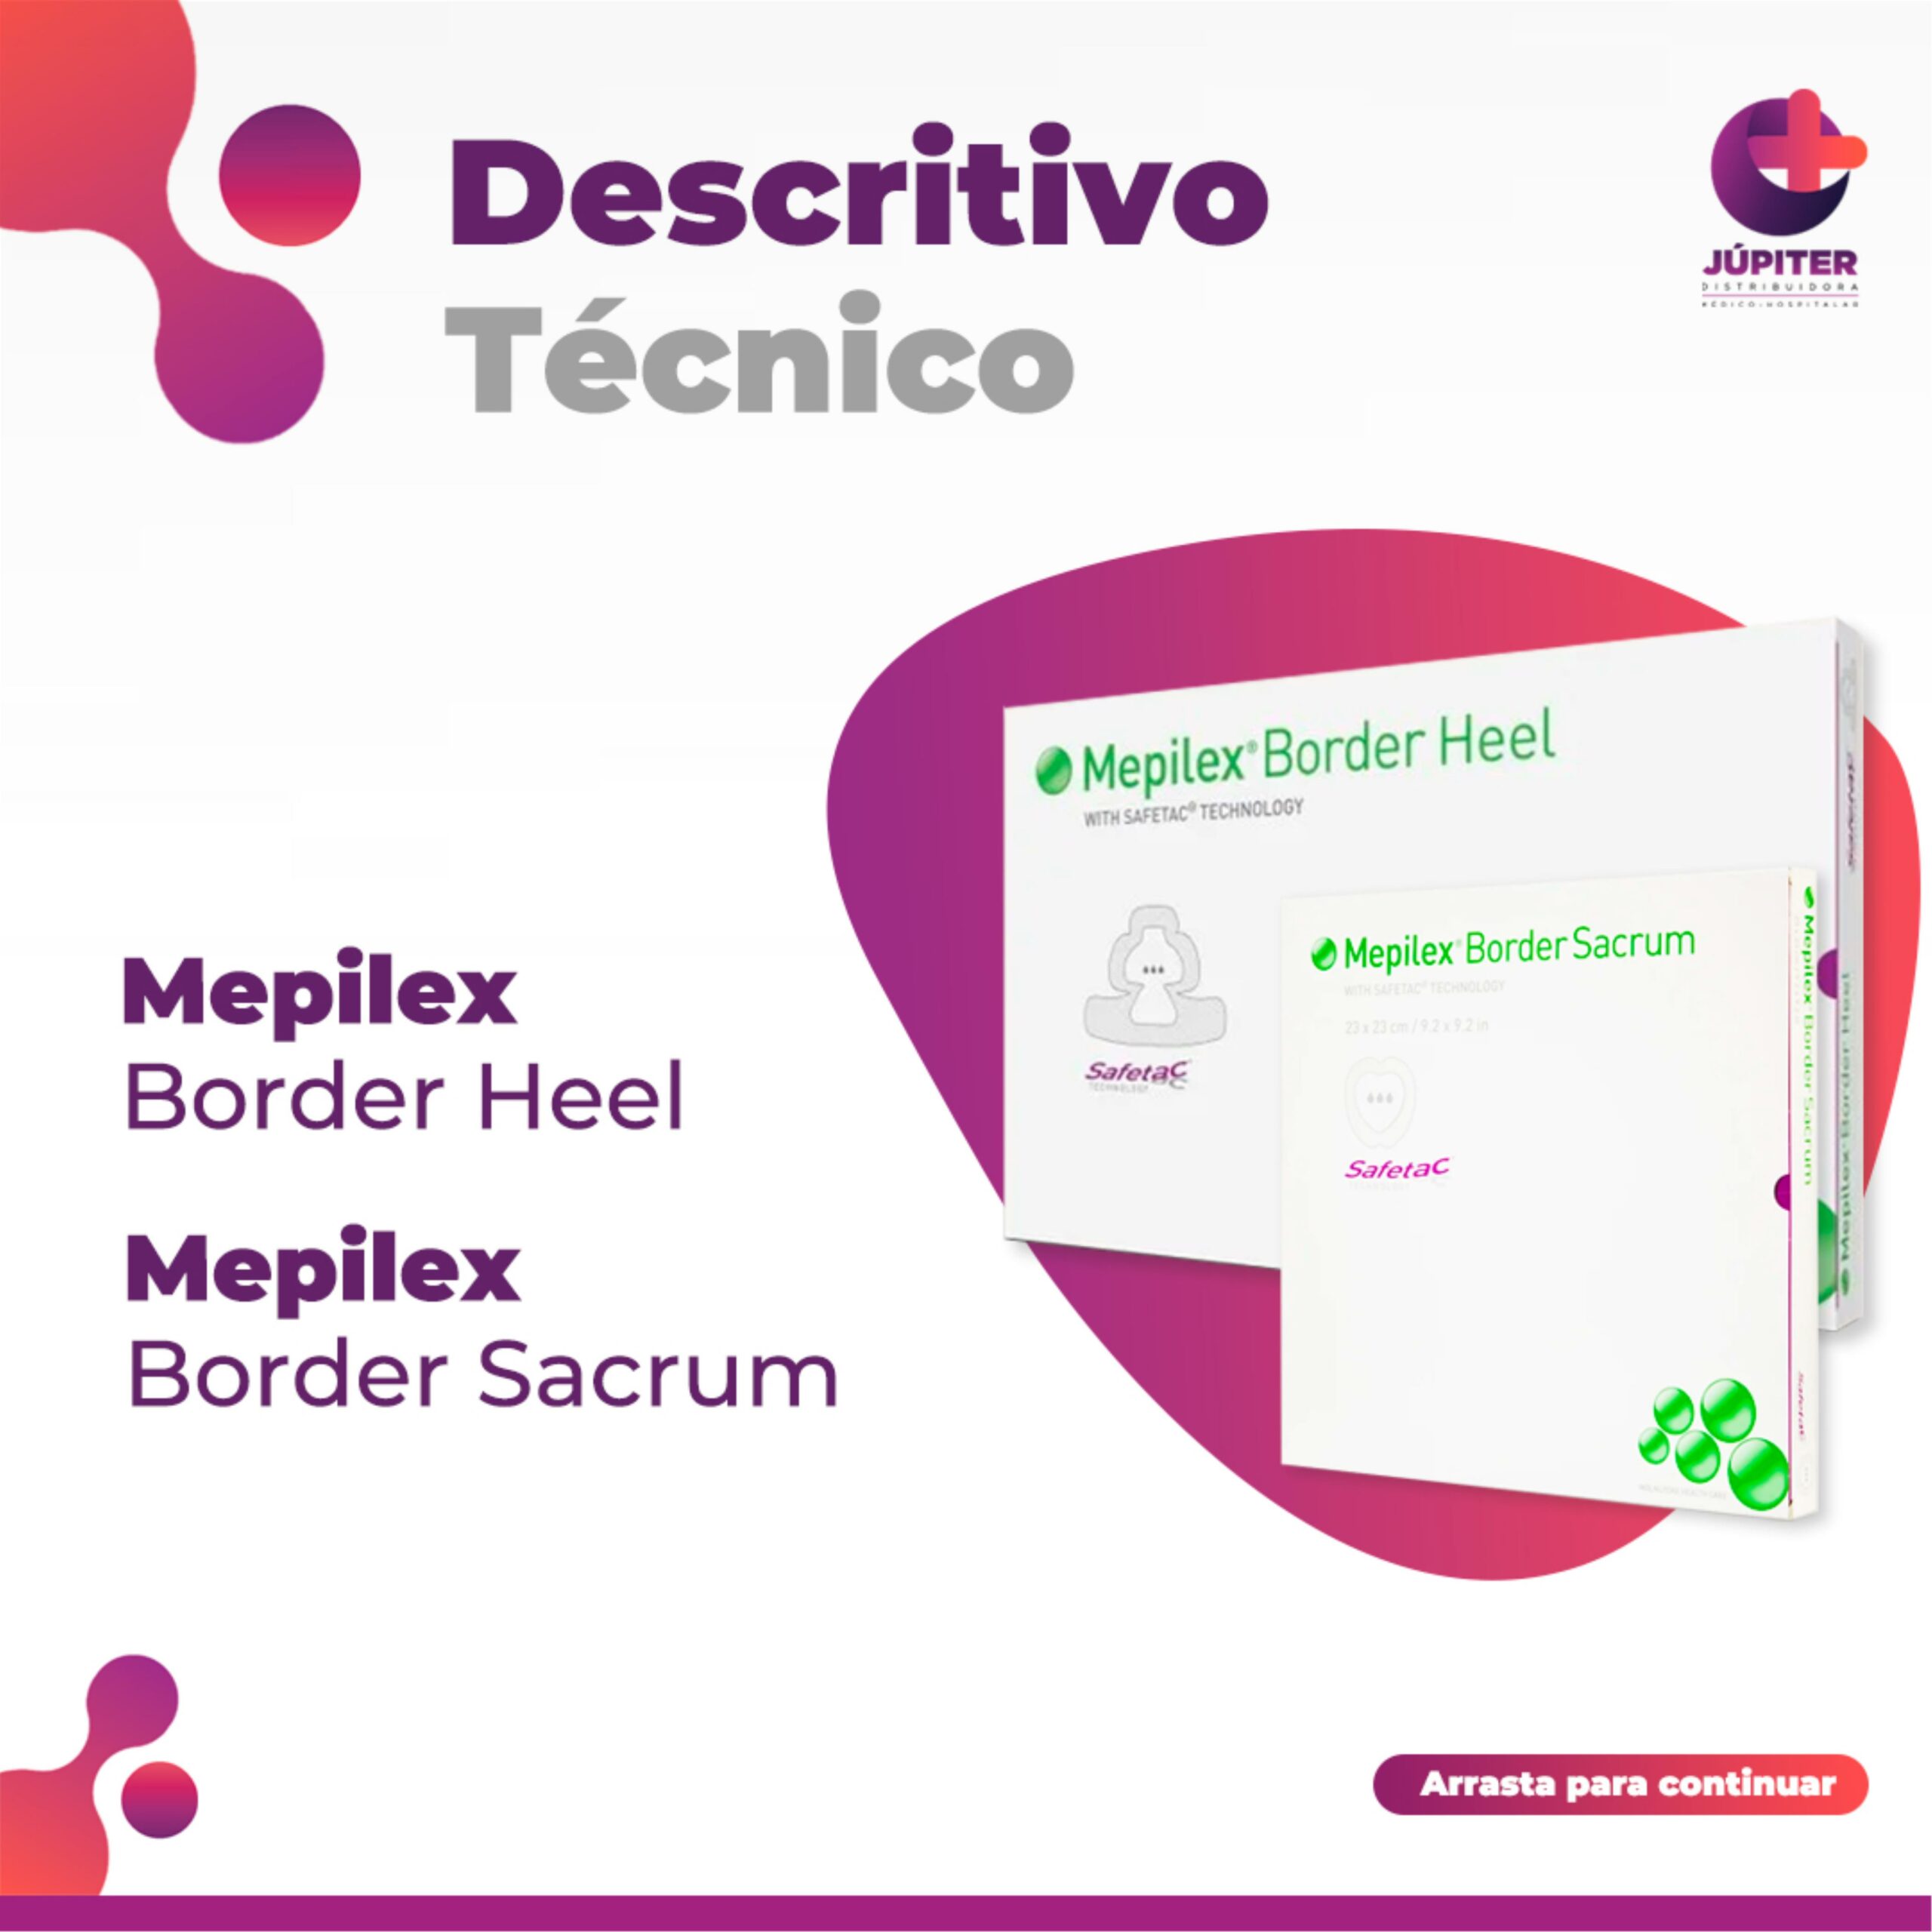 Descritivo Técnico Mepilex Border Heel e Mepilex Border Sacrum